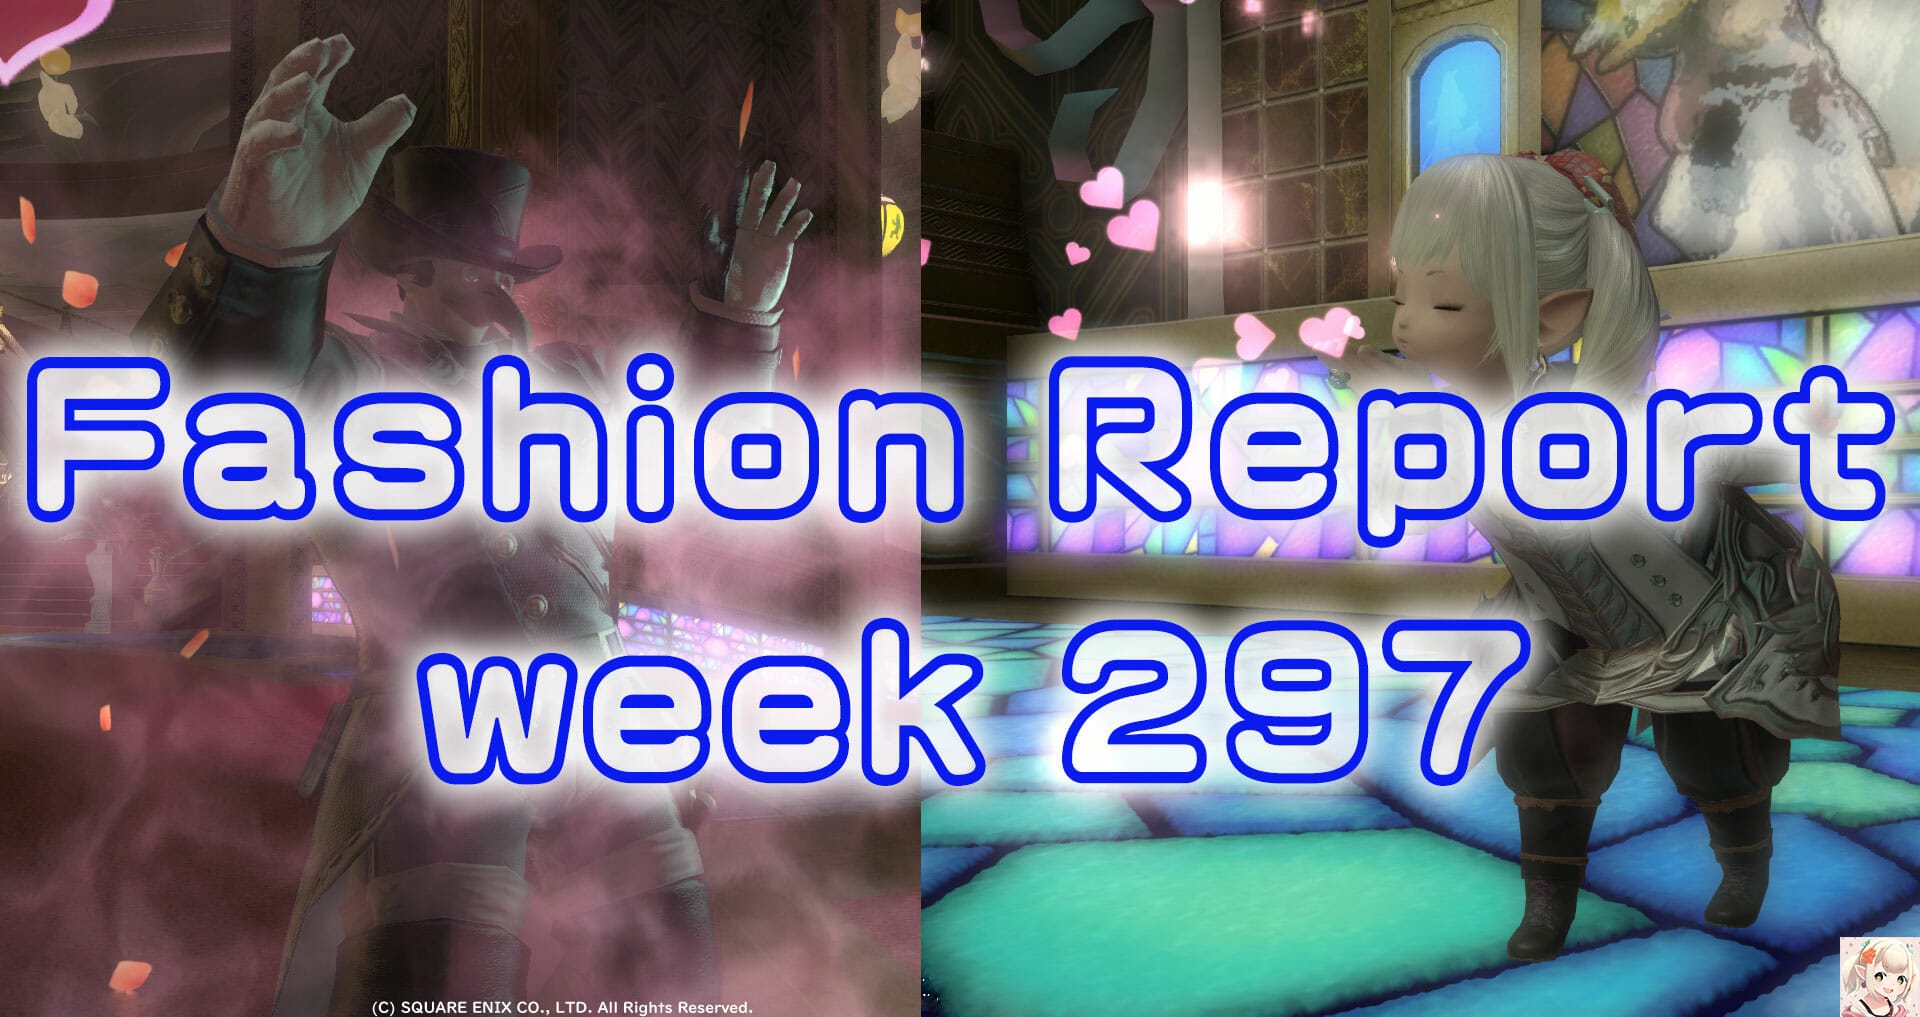 Fashion Report week 297